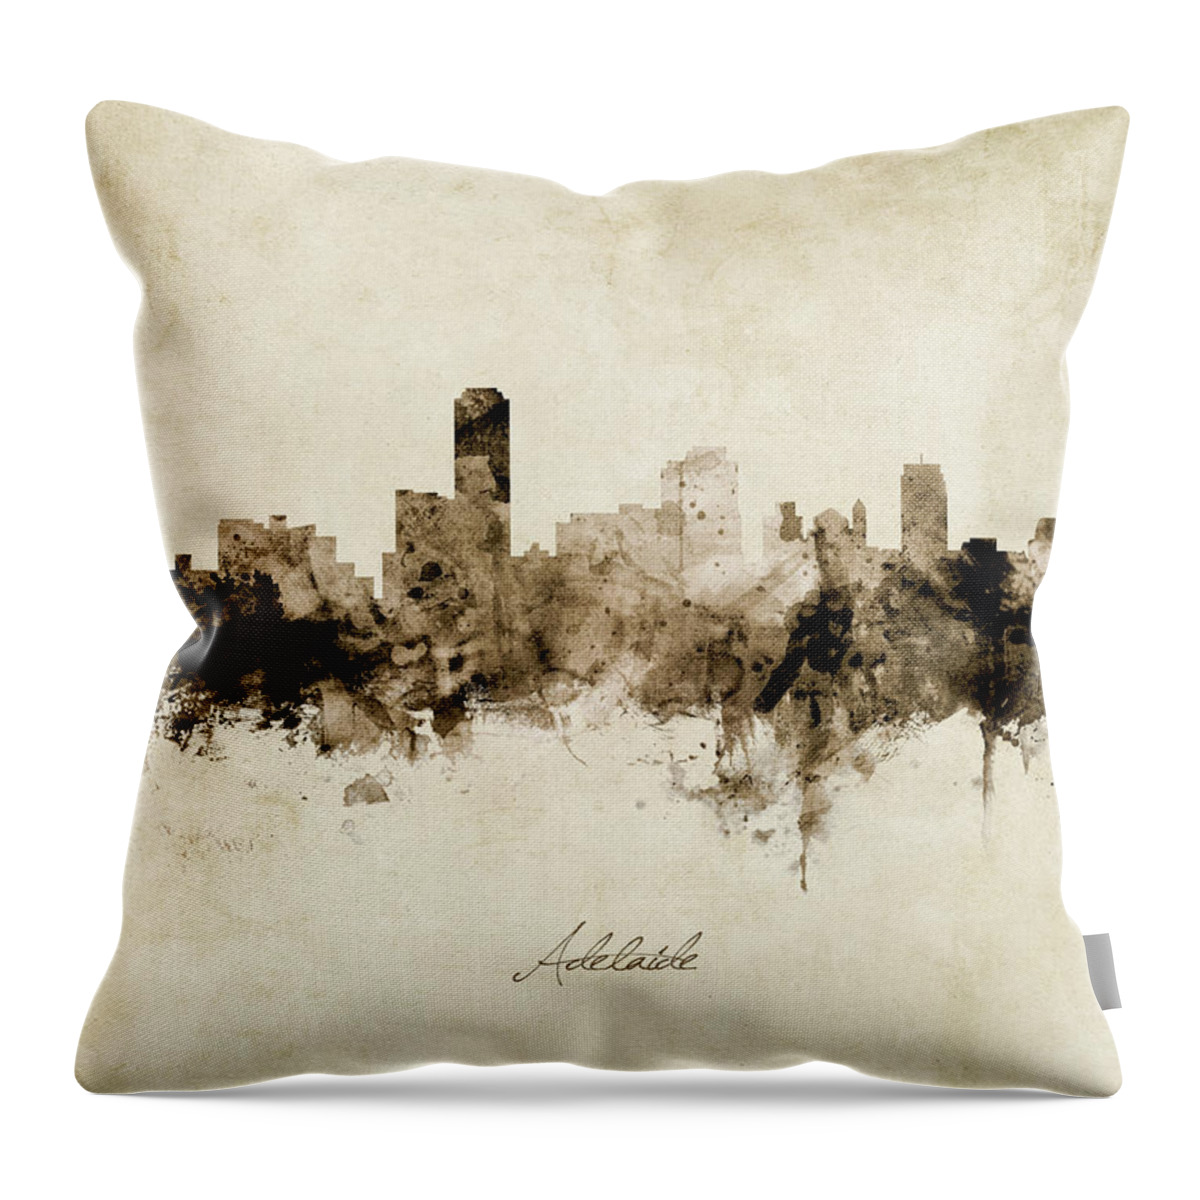 Adelaide Throw Pillow featuring the digital art Adelaide Australia Skyline #13 by Michael Tompsett